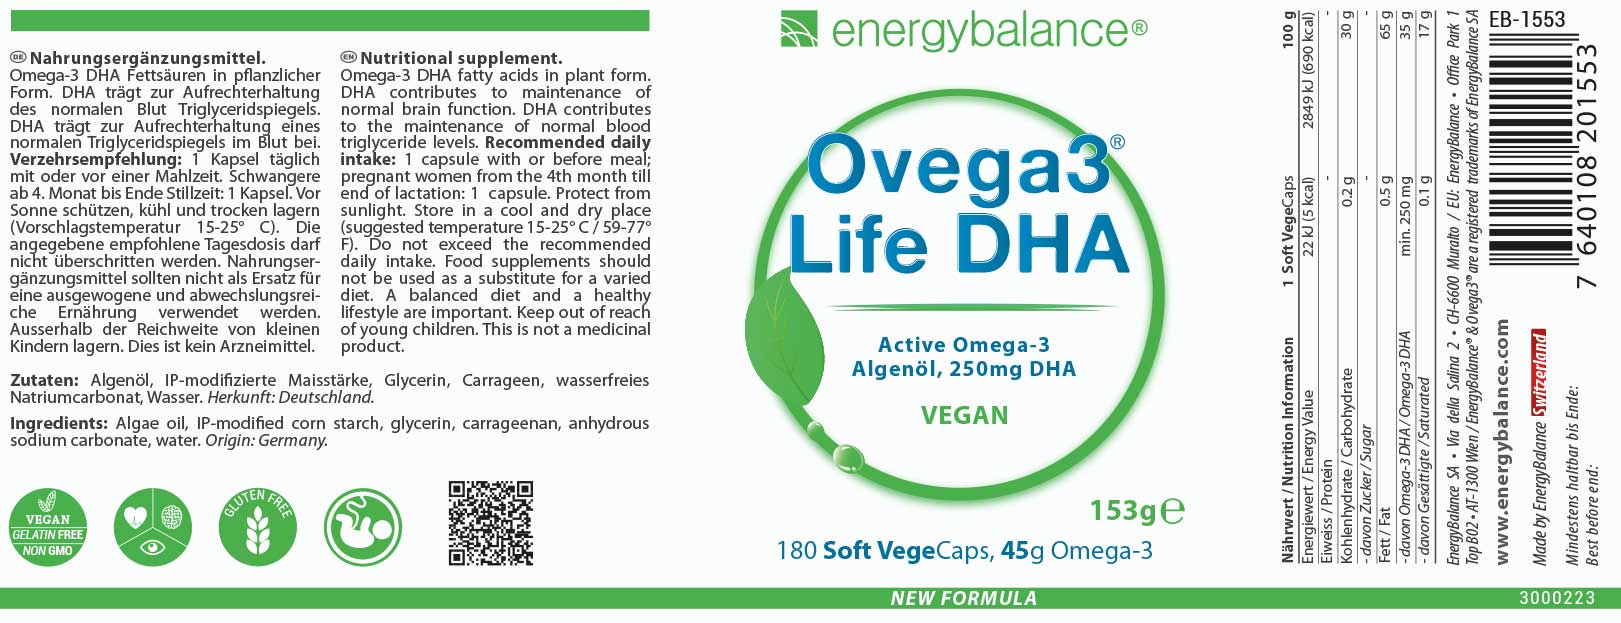 Ovega3 life DHA Algenöl, 180 Kapseln